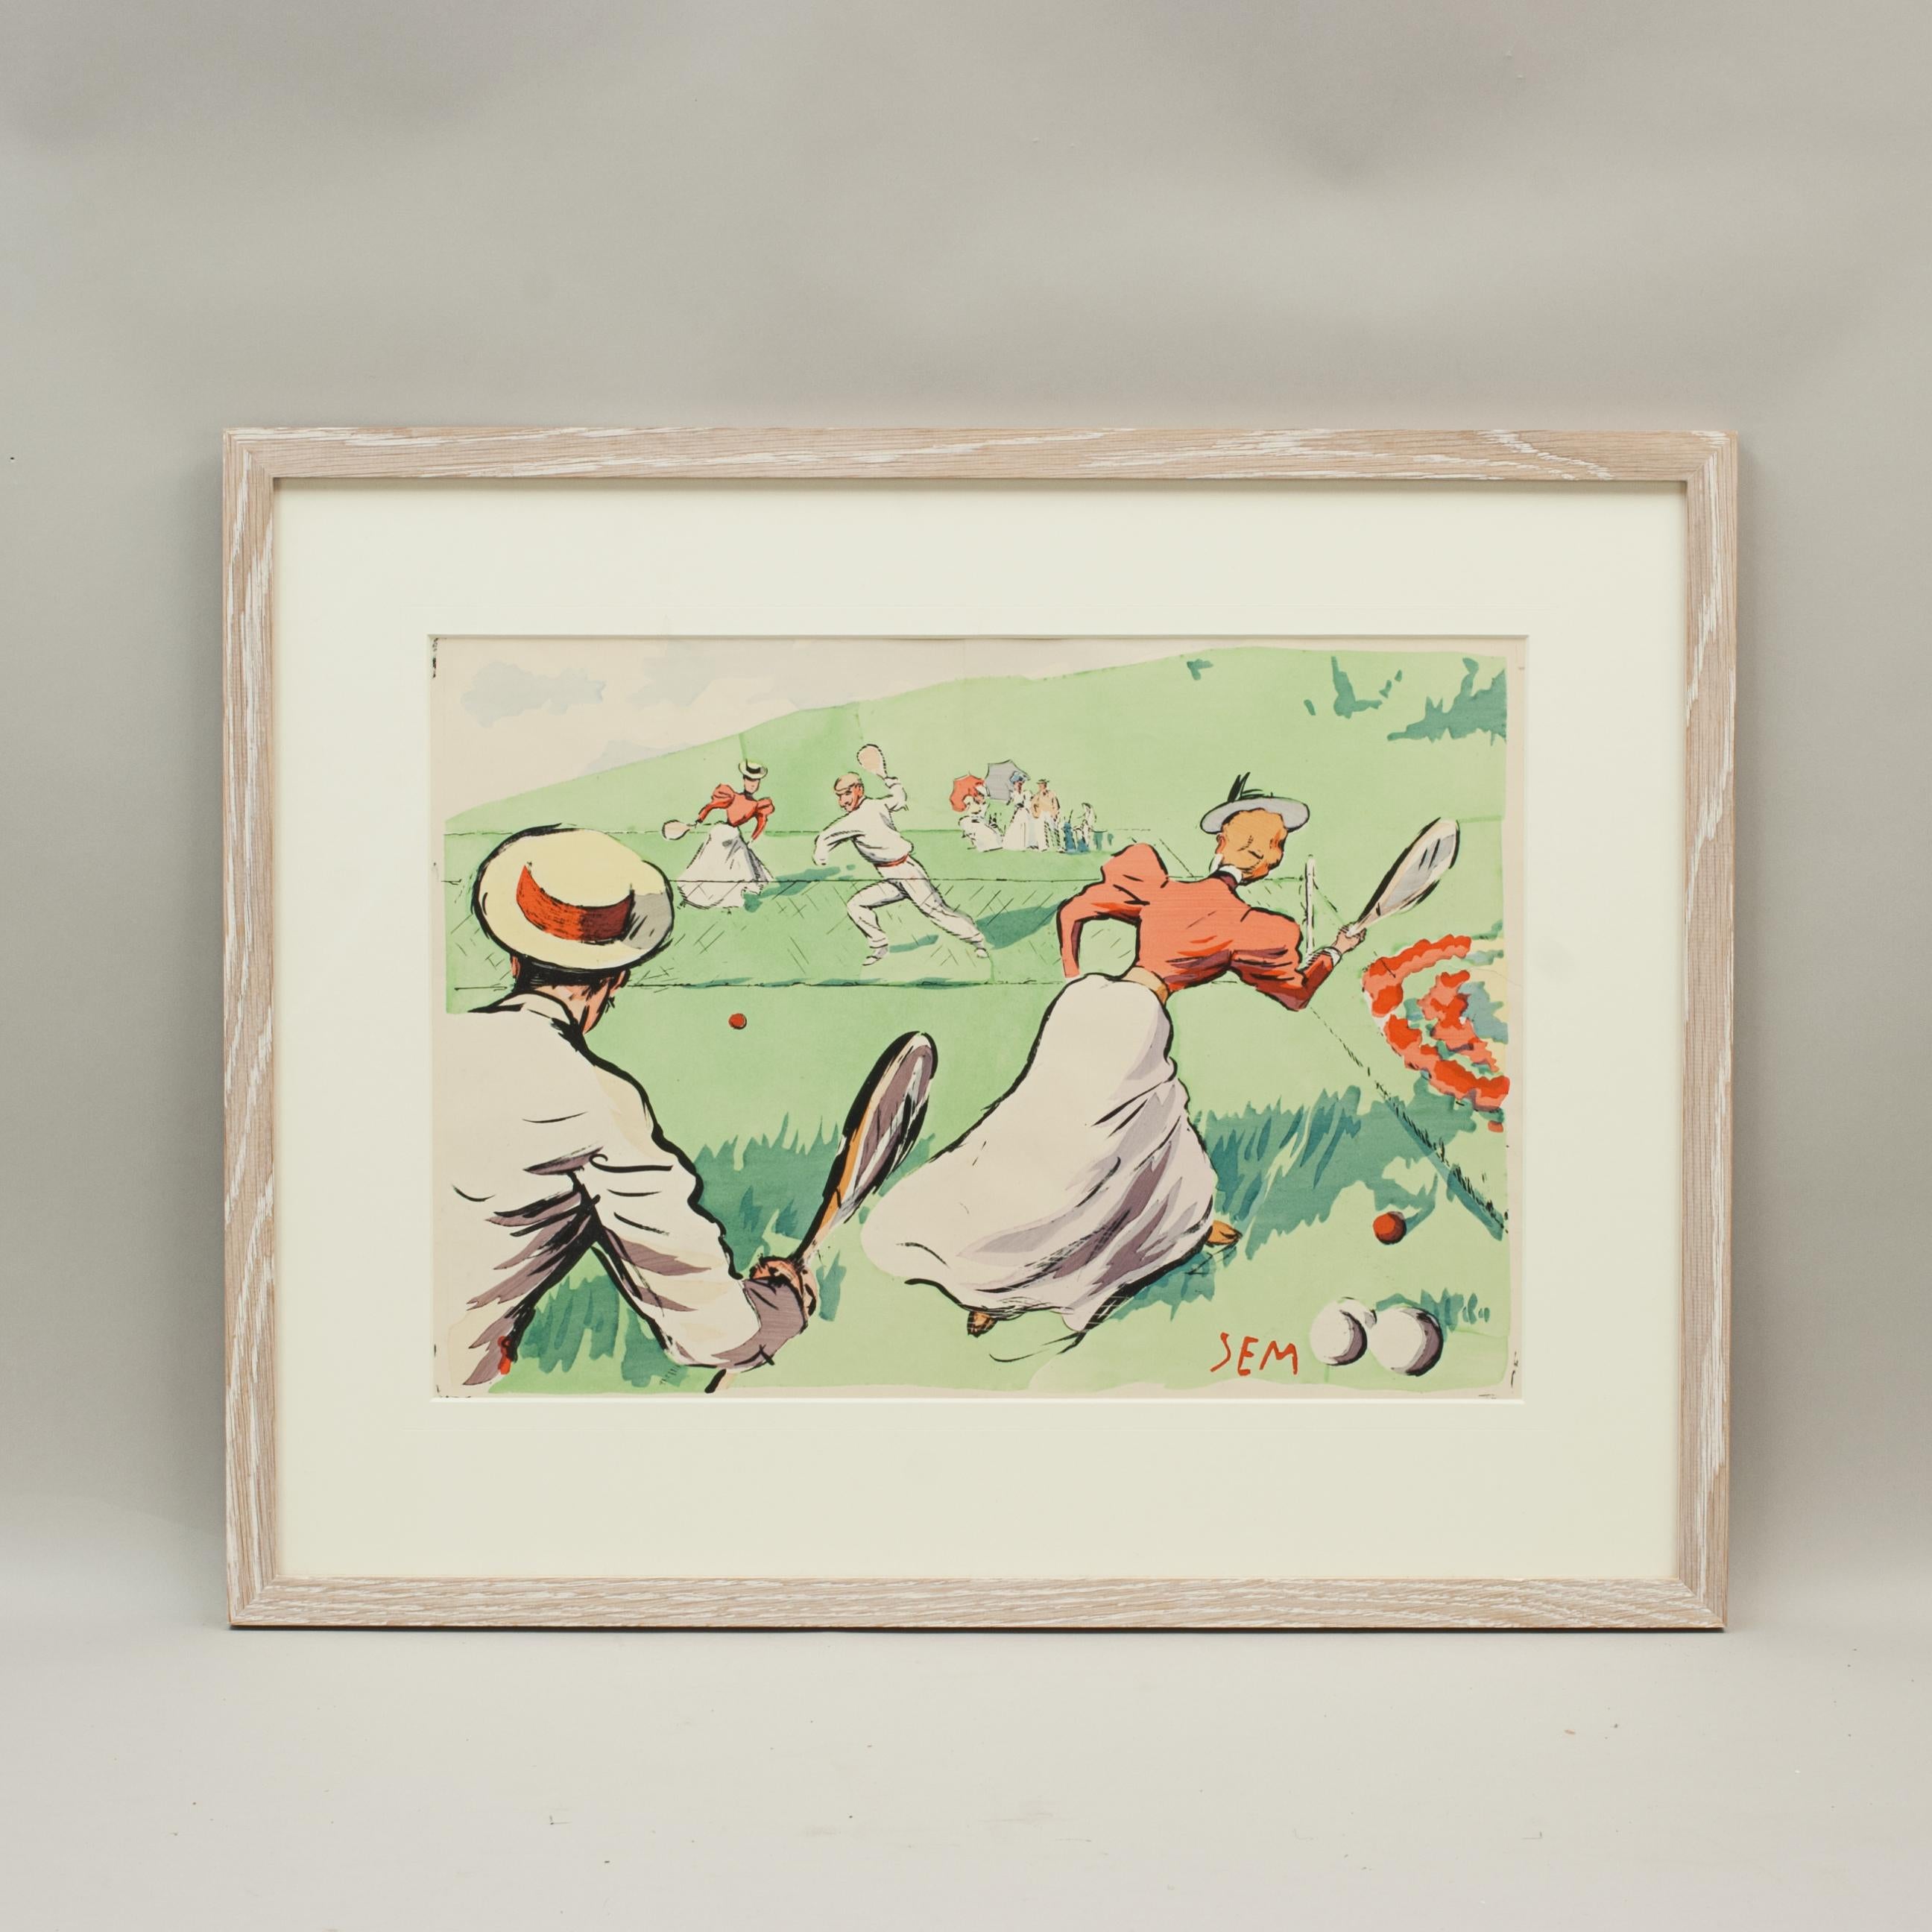 Paper Vintage Tennis, Georges Goursat (SEM) Lawn Tennis Print